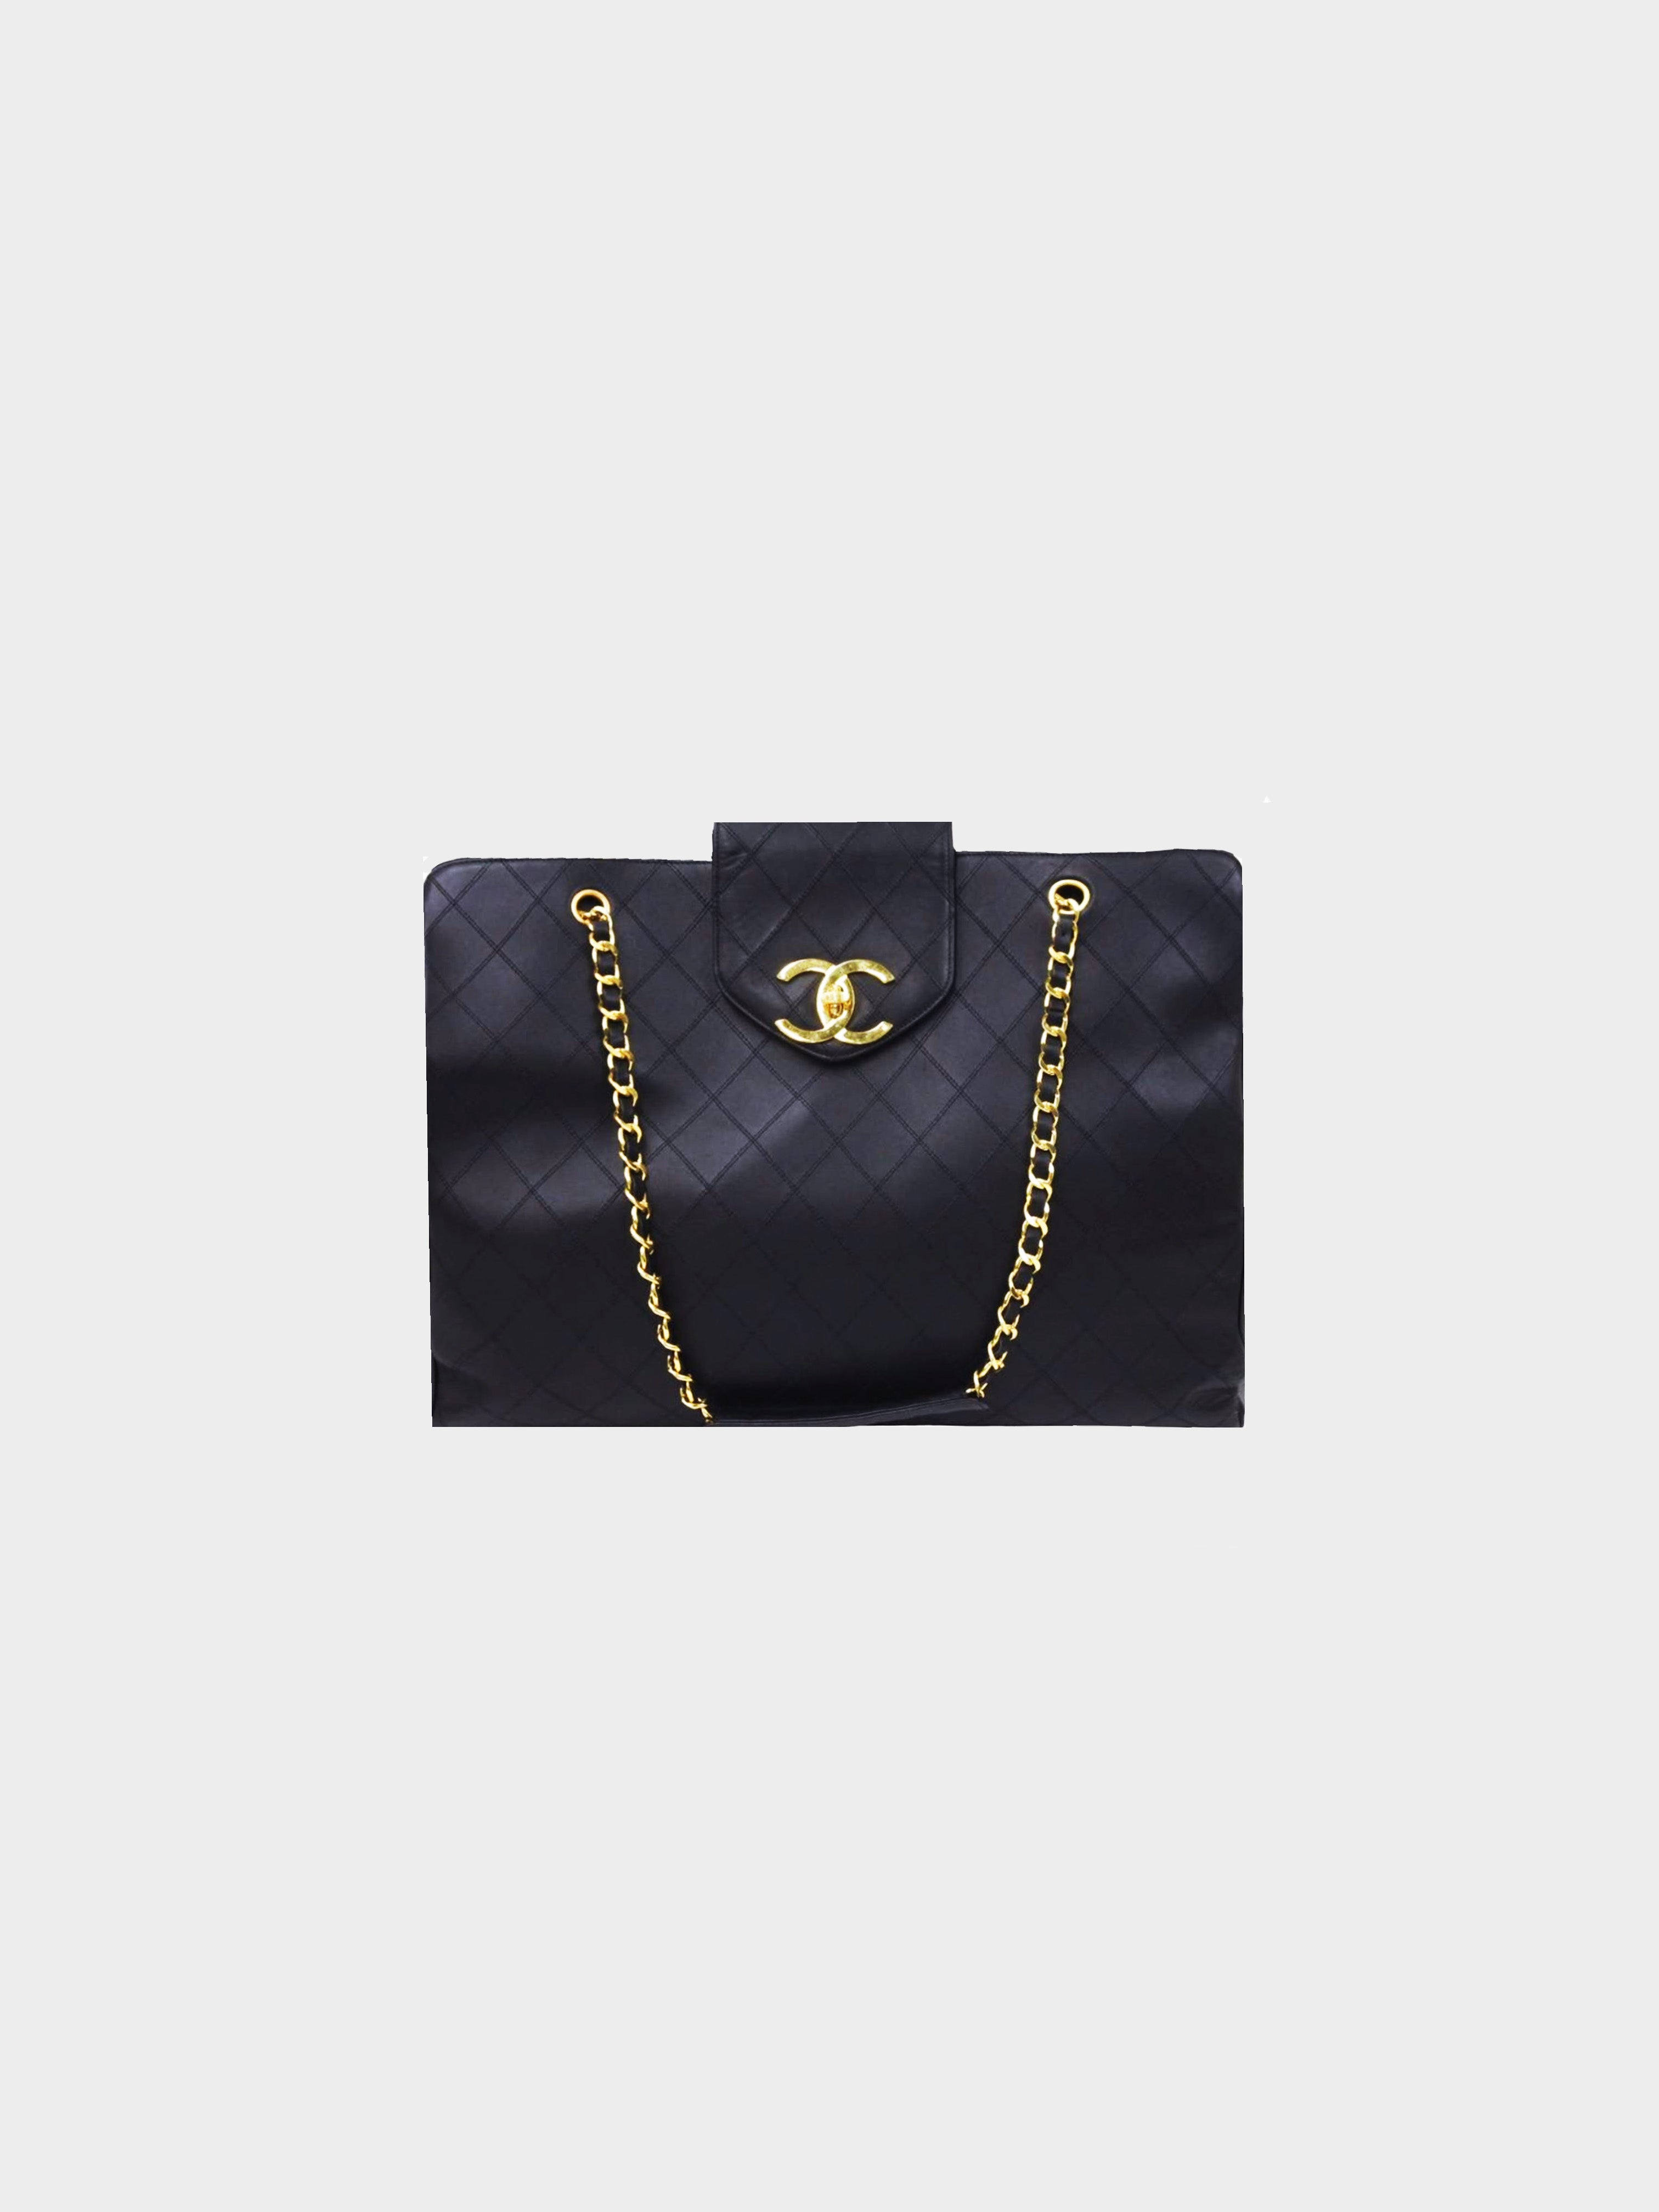 Chanel 2020 Black Lambskin Weekender Bag · INTO